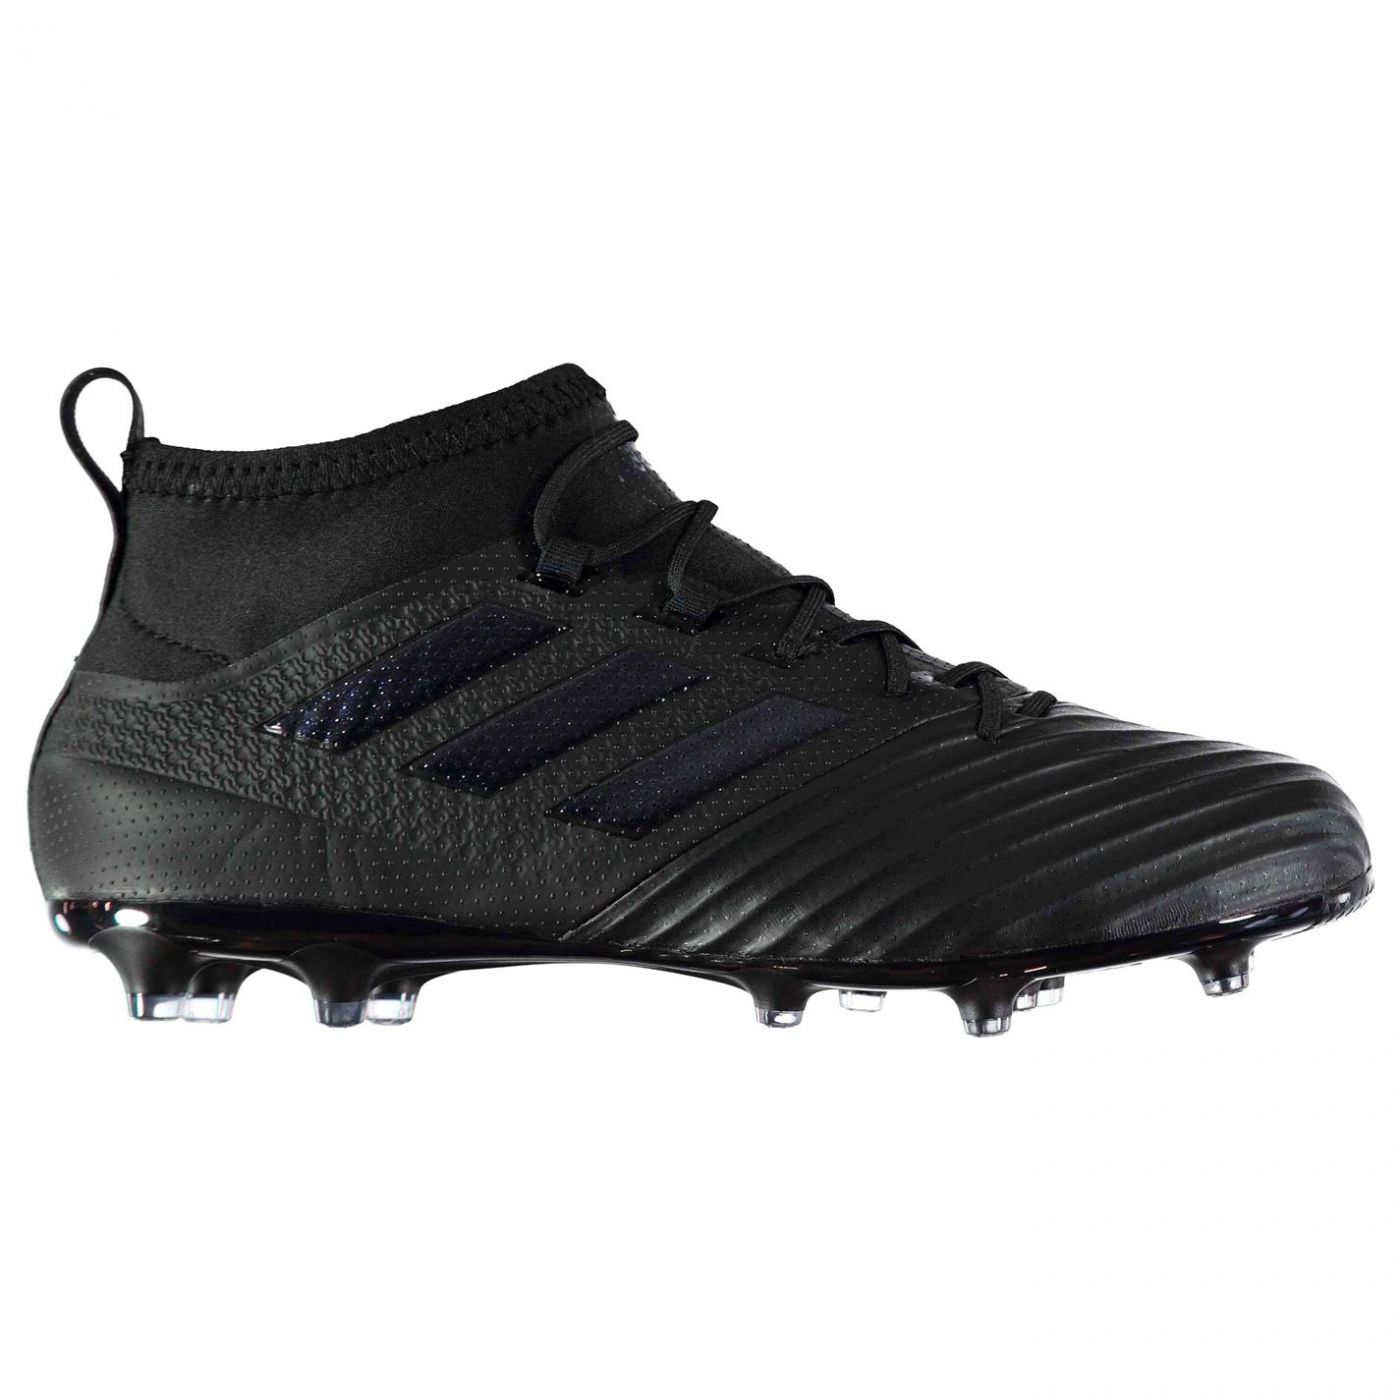 Adidas Ace 17.2 Primemesh FG Mens Football Boots